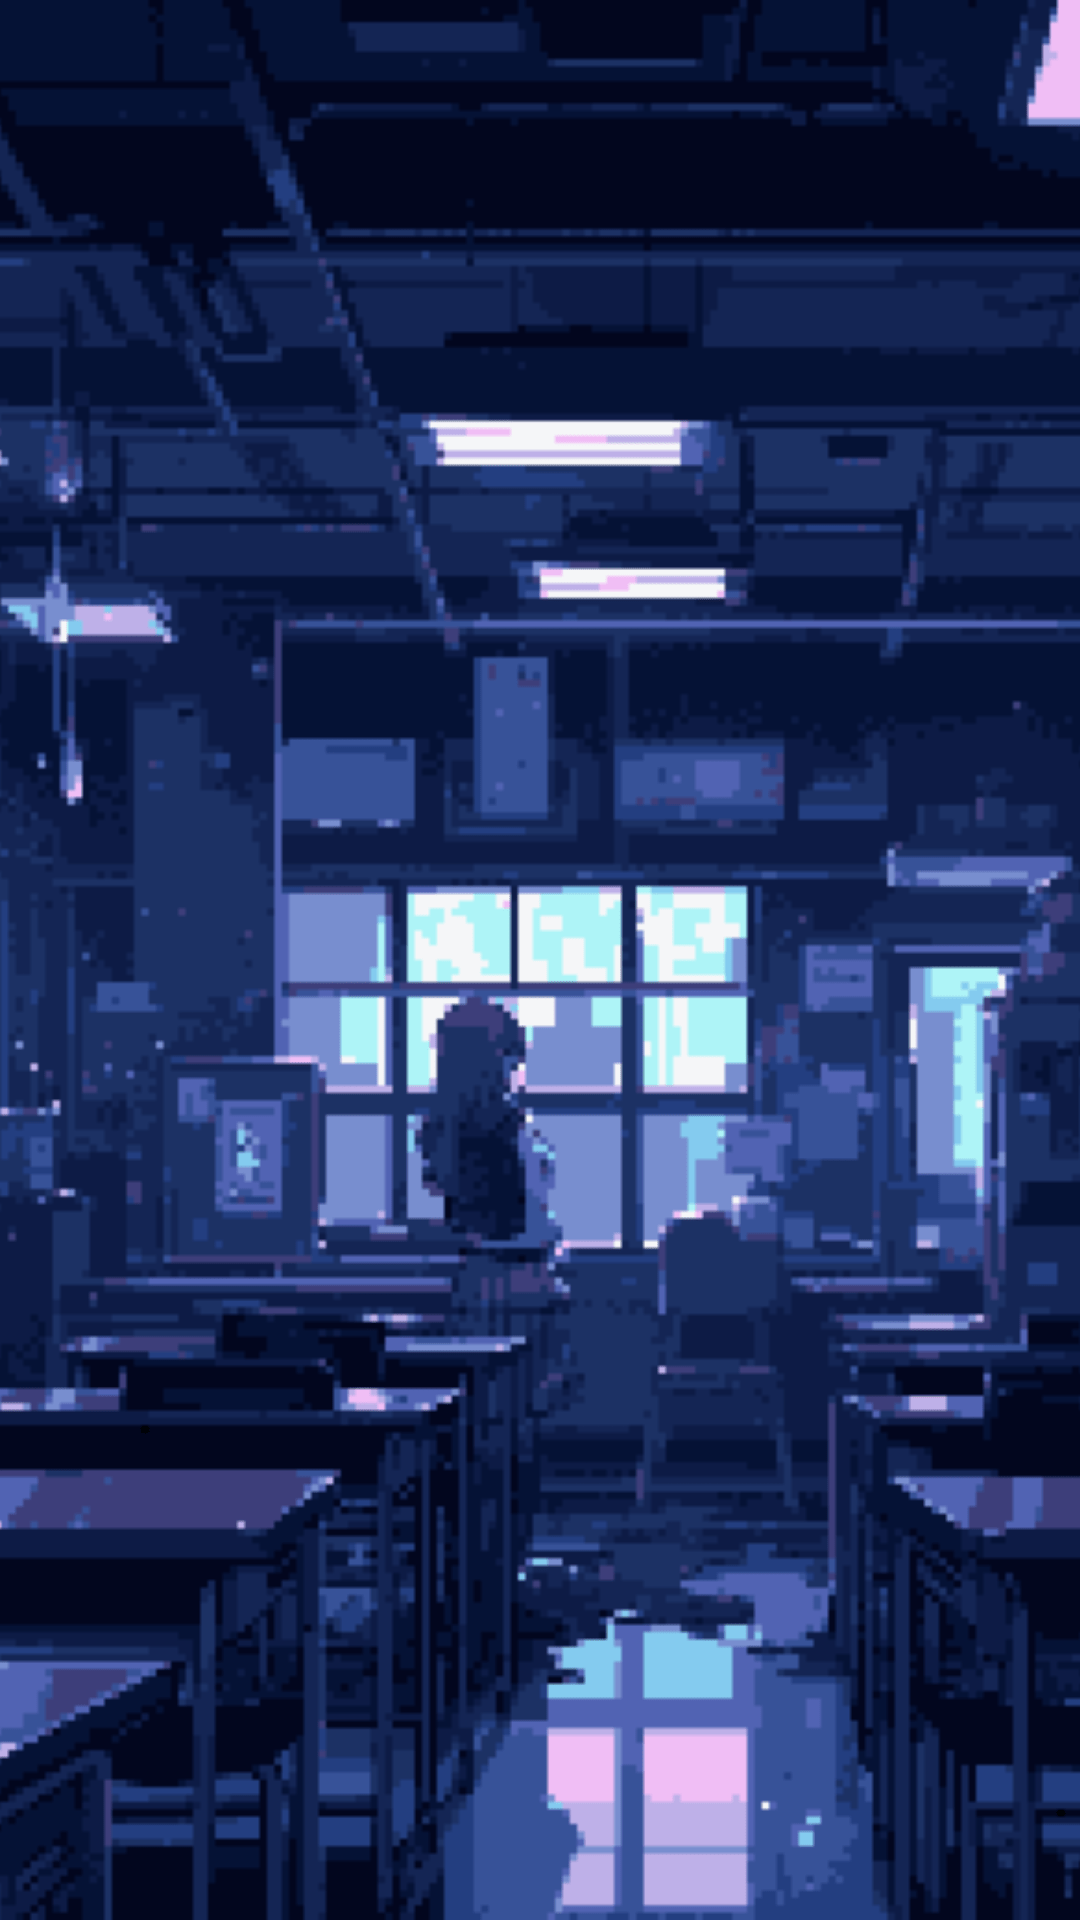 A girl walking in a dark school hallway with a backpack on - Pixel art